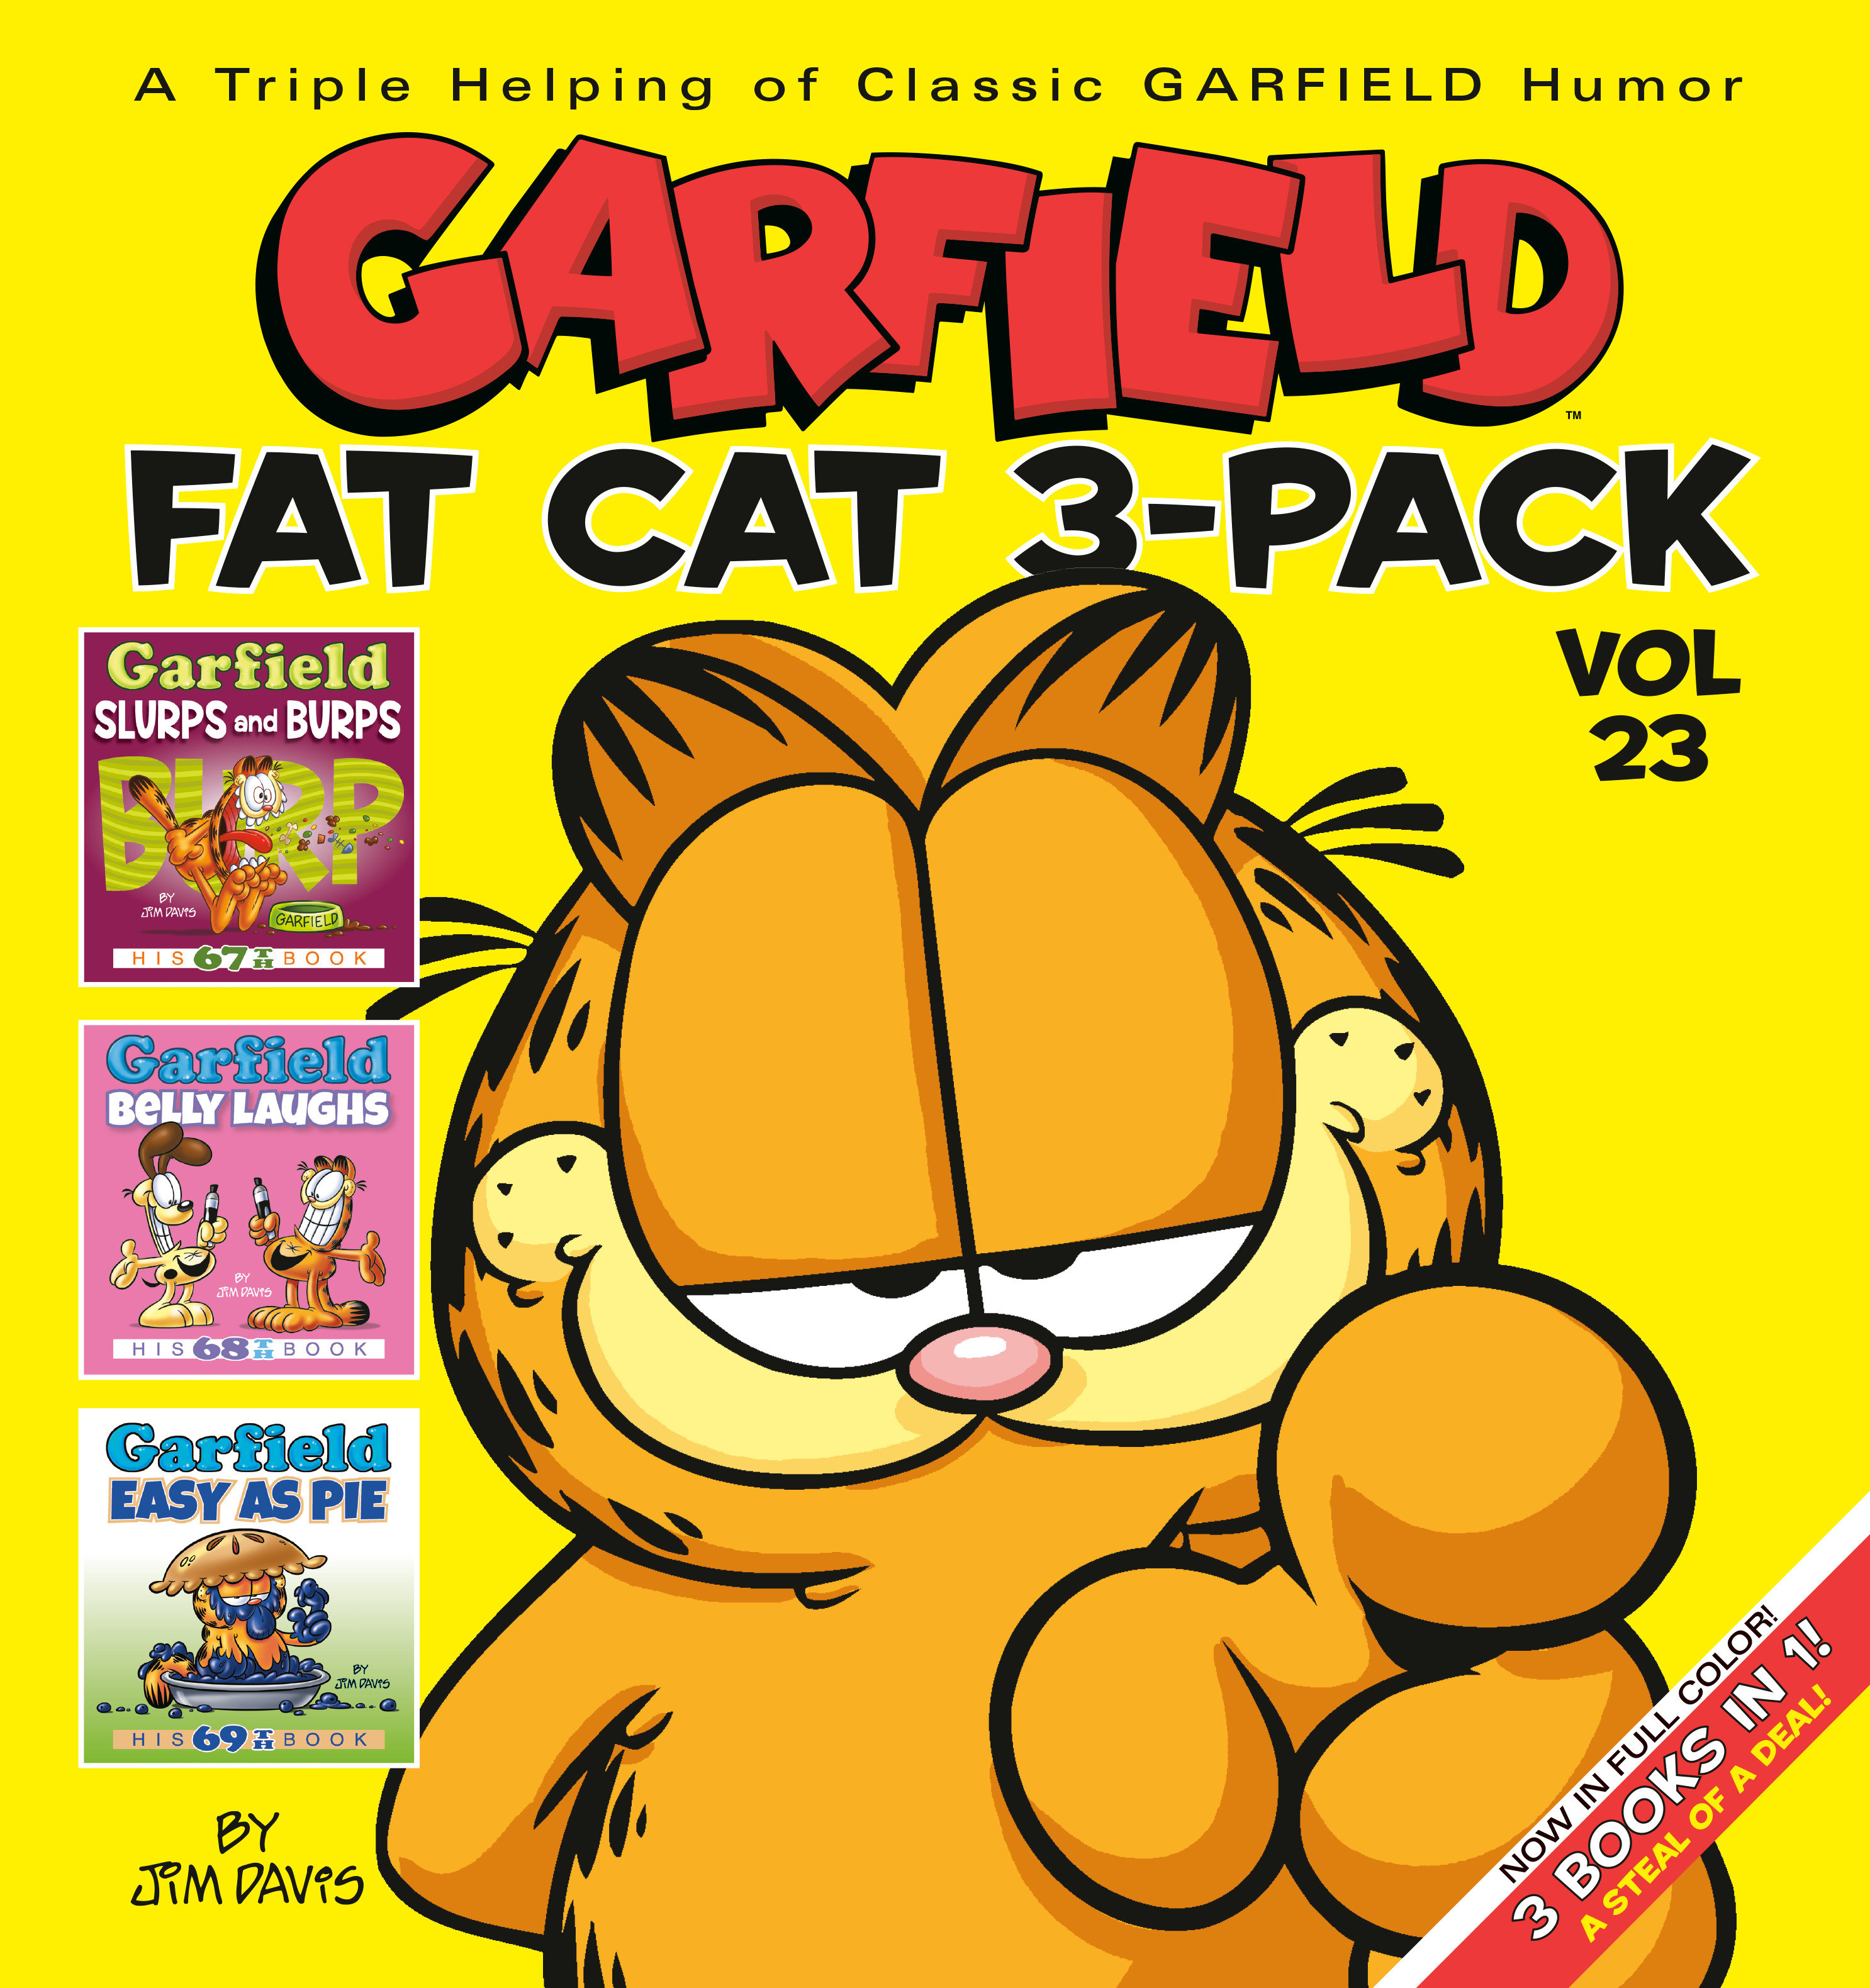 Garfield Fat Cat 3-Pack Volume 23